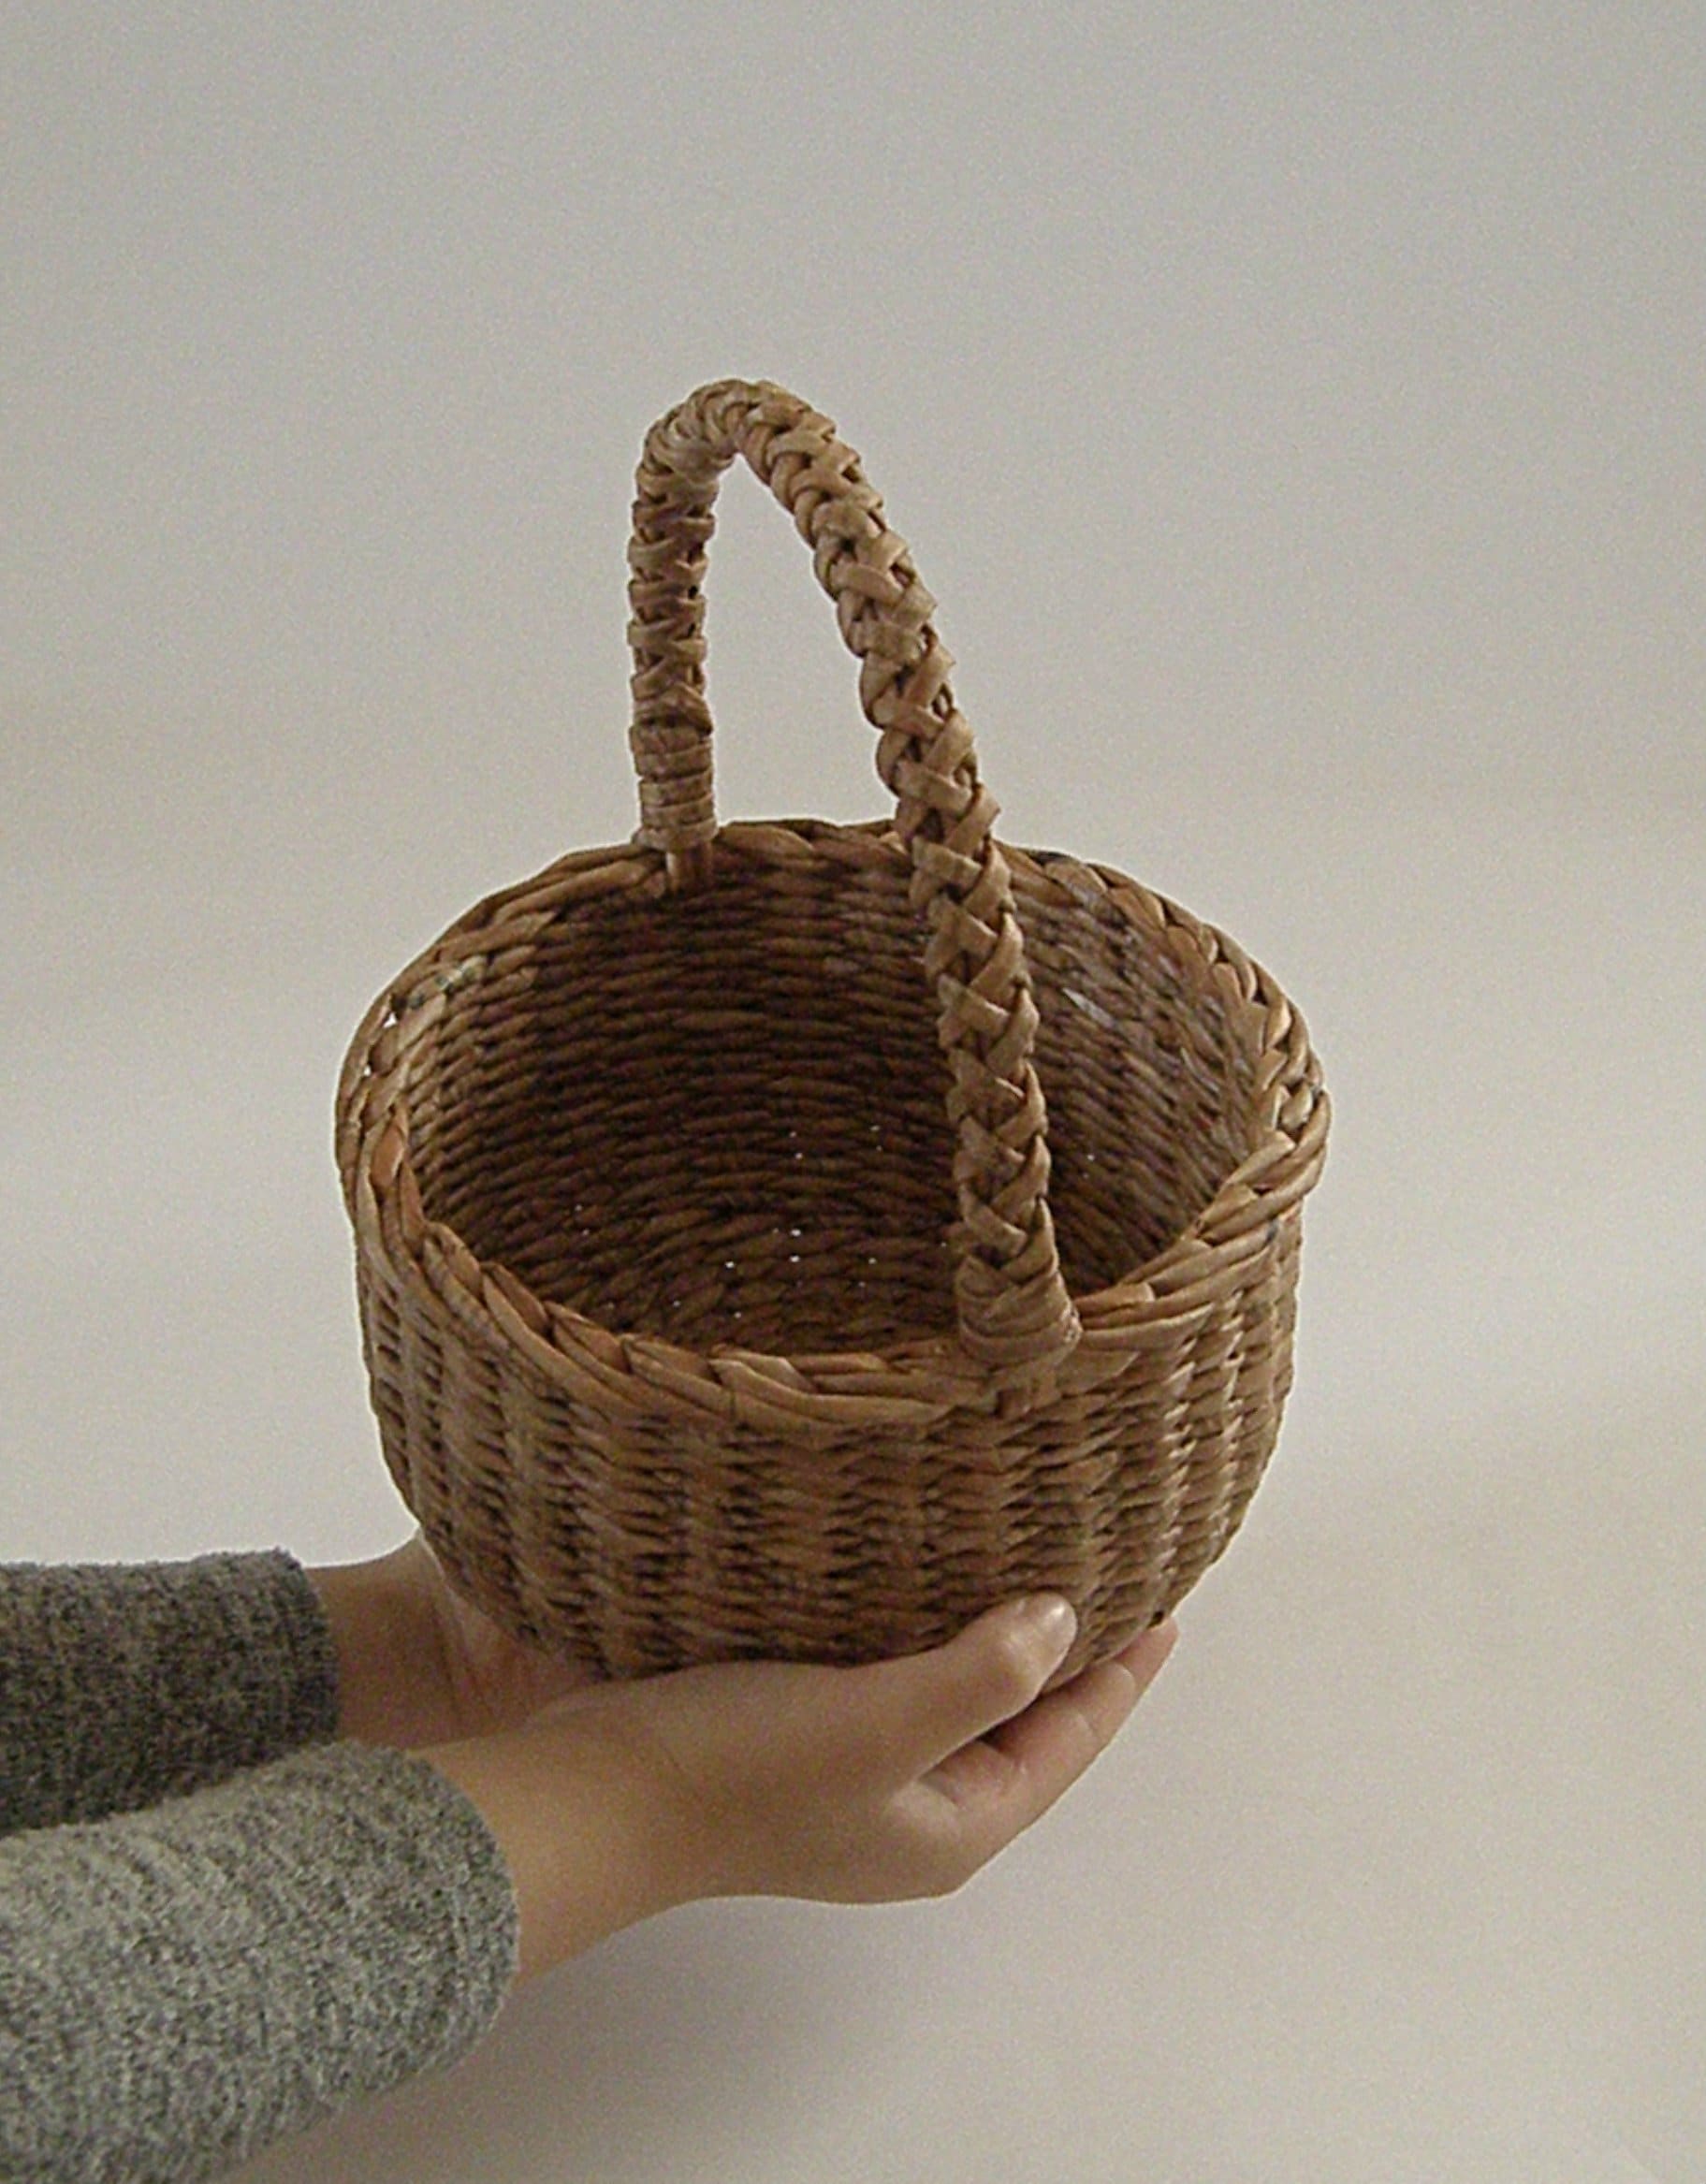 Flower Girls Basket Small Wicker Rustic Home Decor Basket With Handle Small Rustic Basket Round Basket For Kids